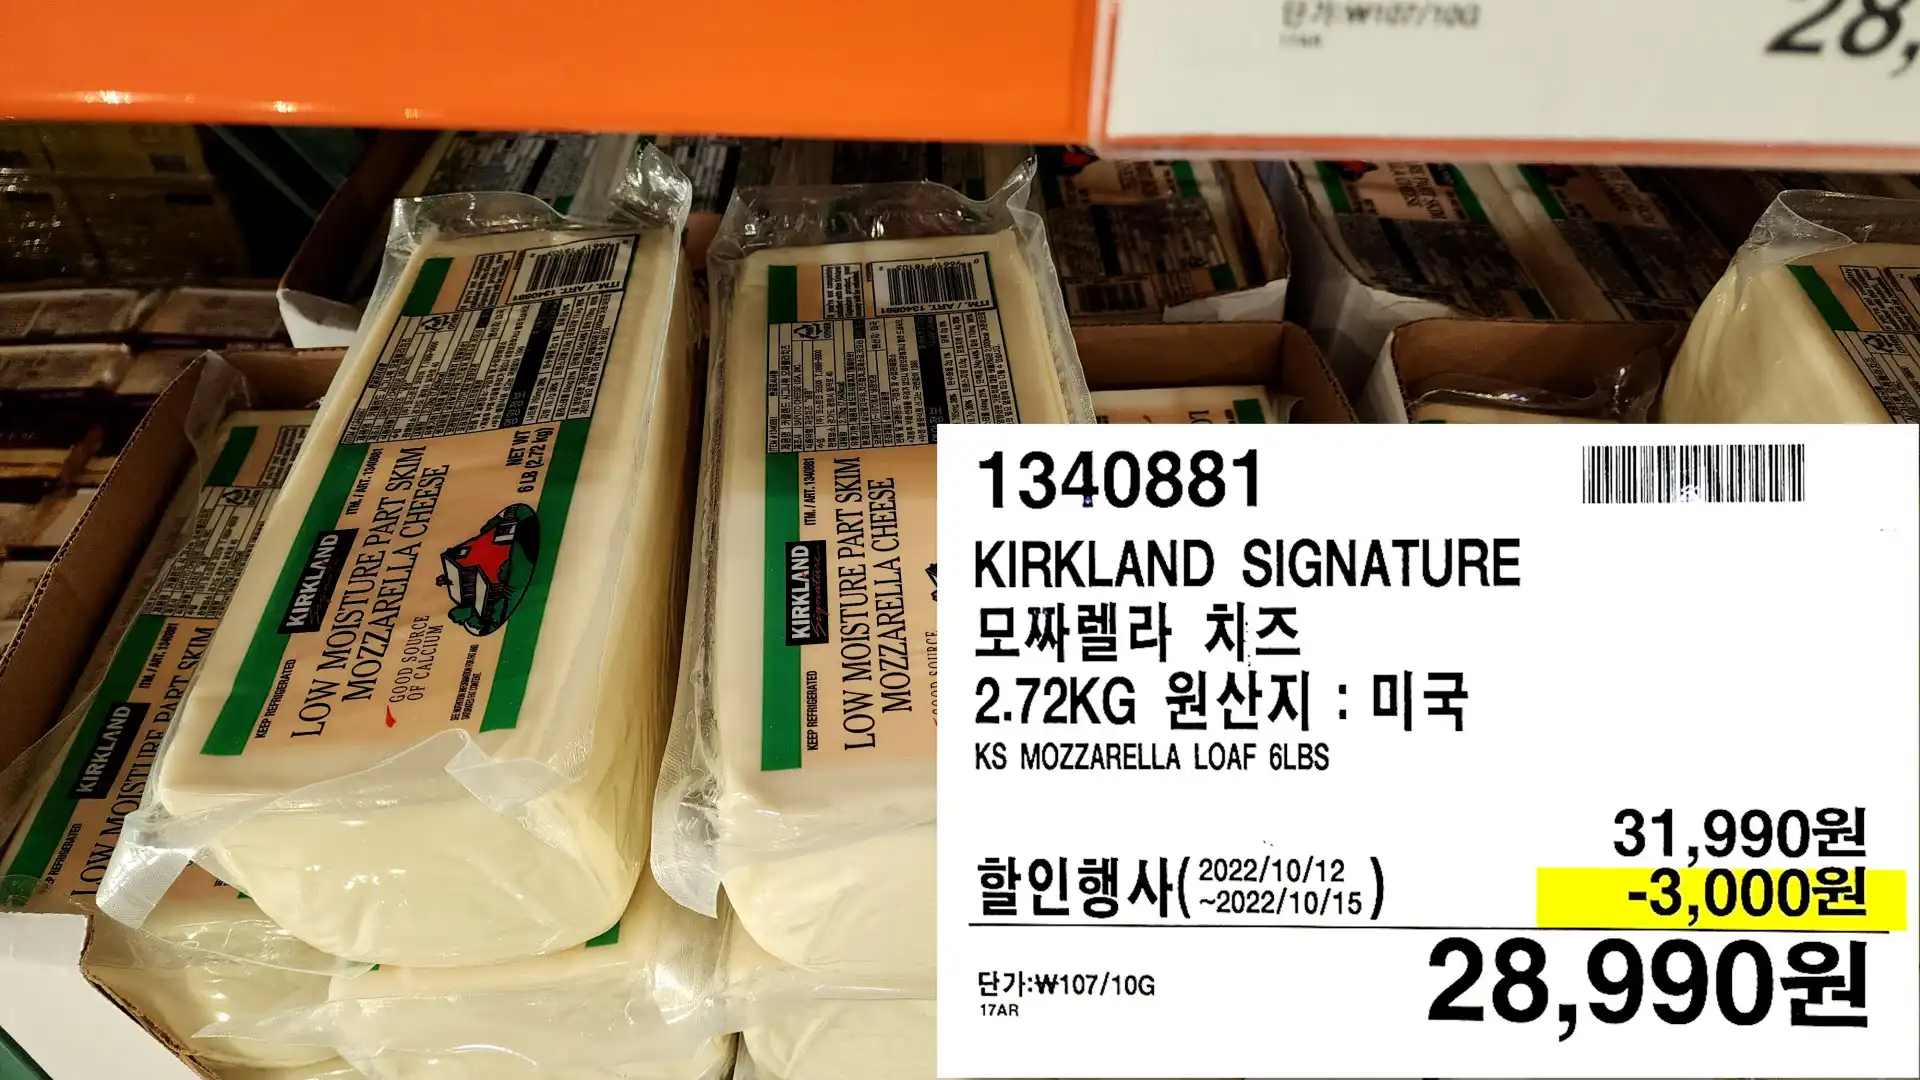 KIRKLAND SIGNATURE
모짜렐라 치즈
2.72KG 원산지 : 미국
KS MOZZARELLA LOAF 6LBS
28,990원